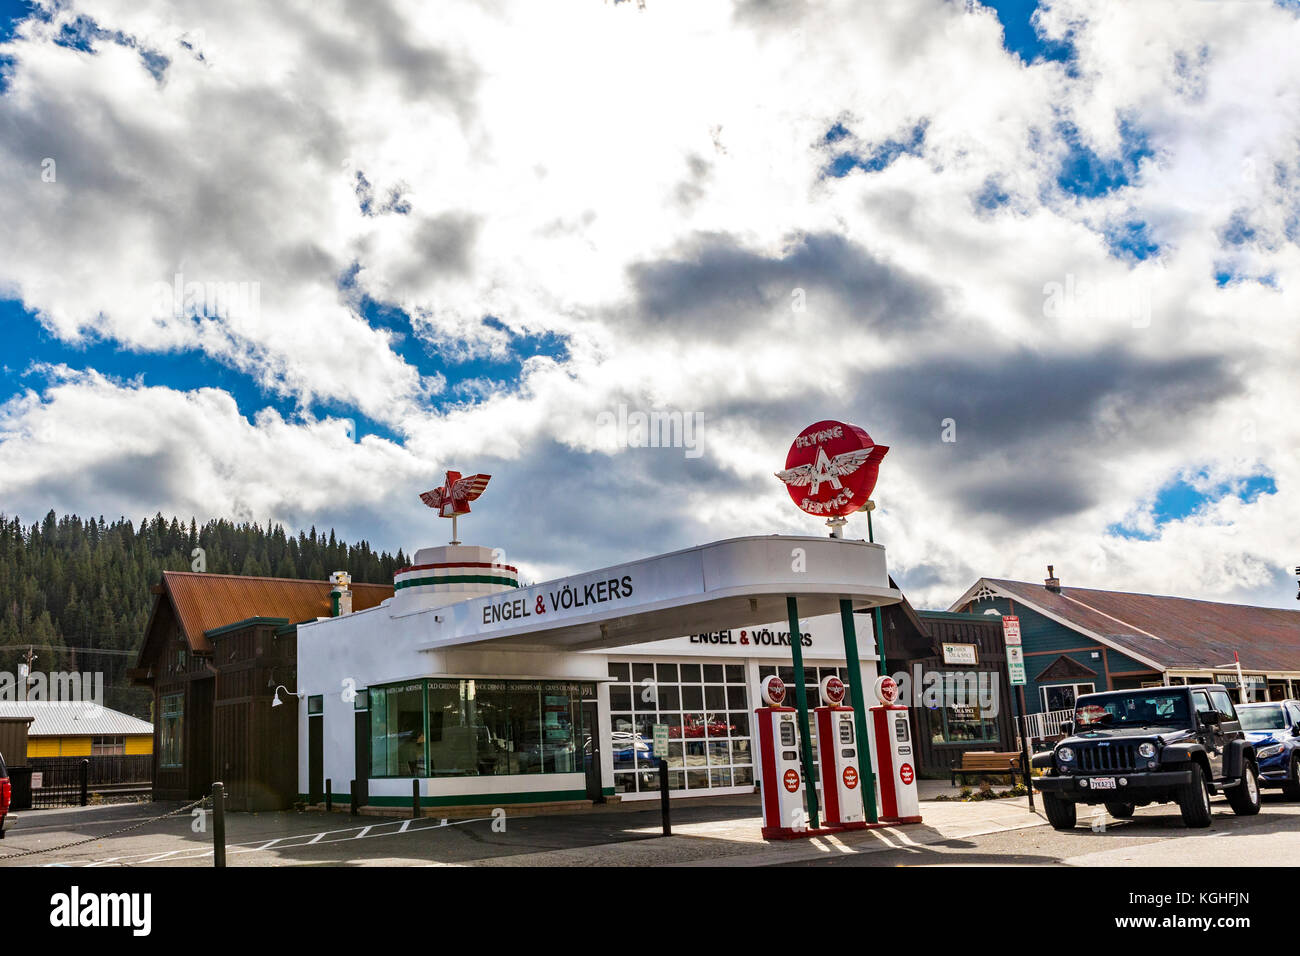 Downtown Truckee California in November 2017 Stock Photo - Alamy